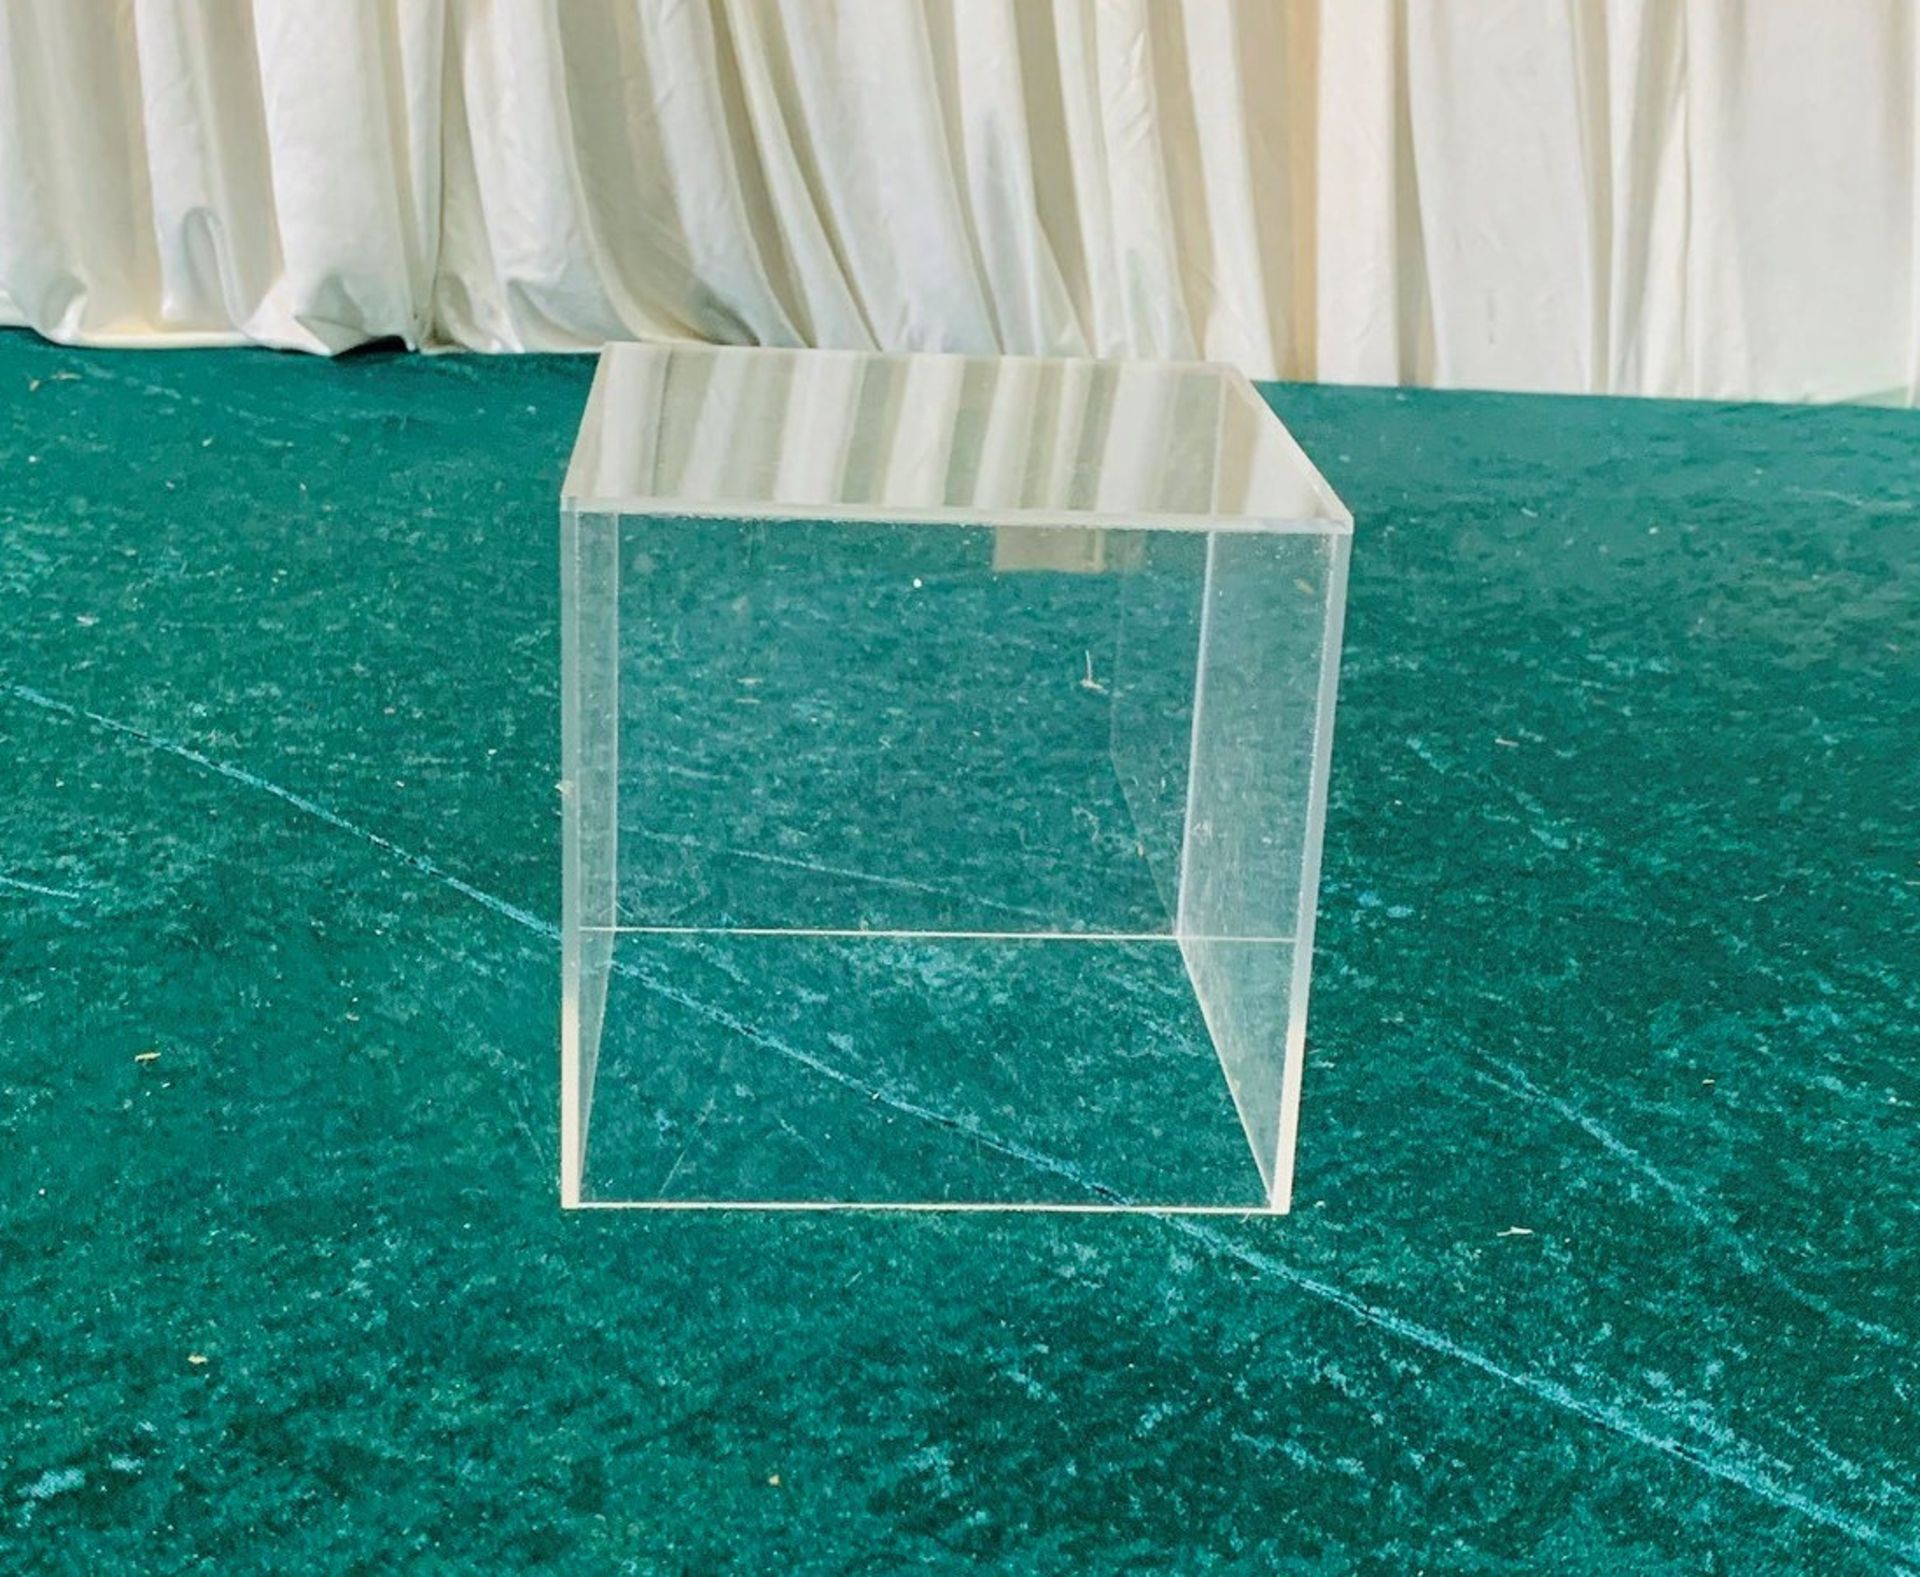 1 x Transparent Acrylic Display Cube - Dimensions: 15x15cm - Ref: Lot 3 - CL548 - Location: Near